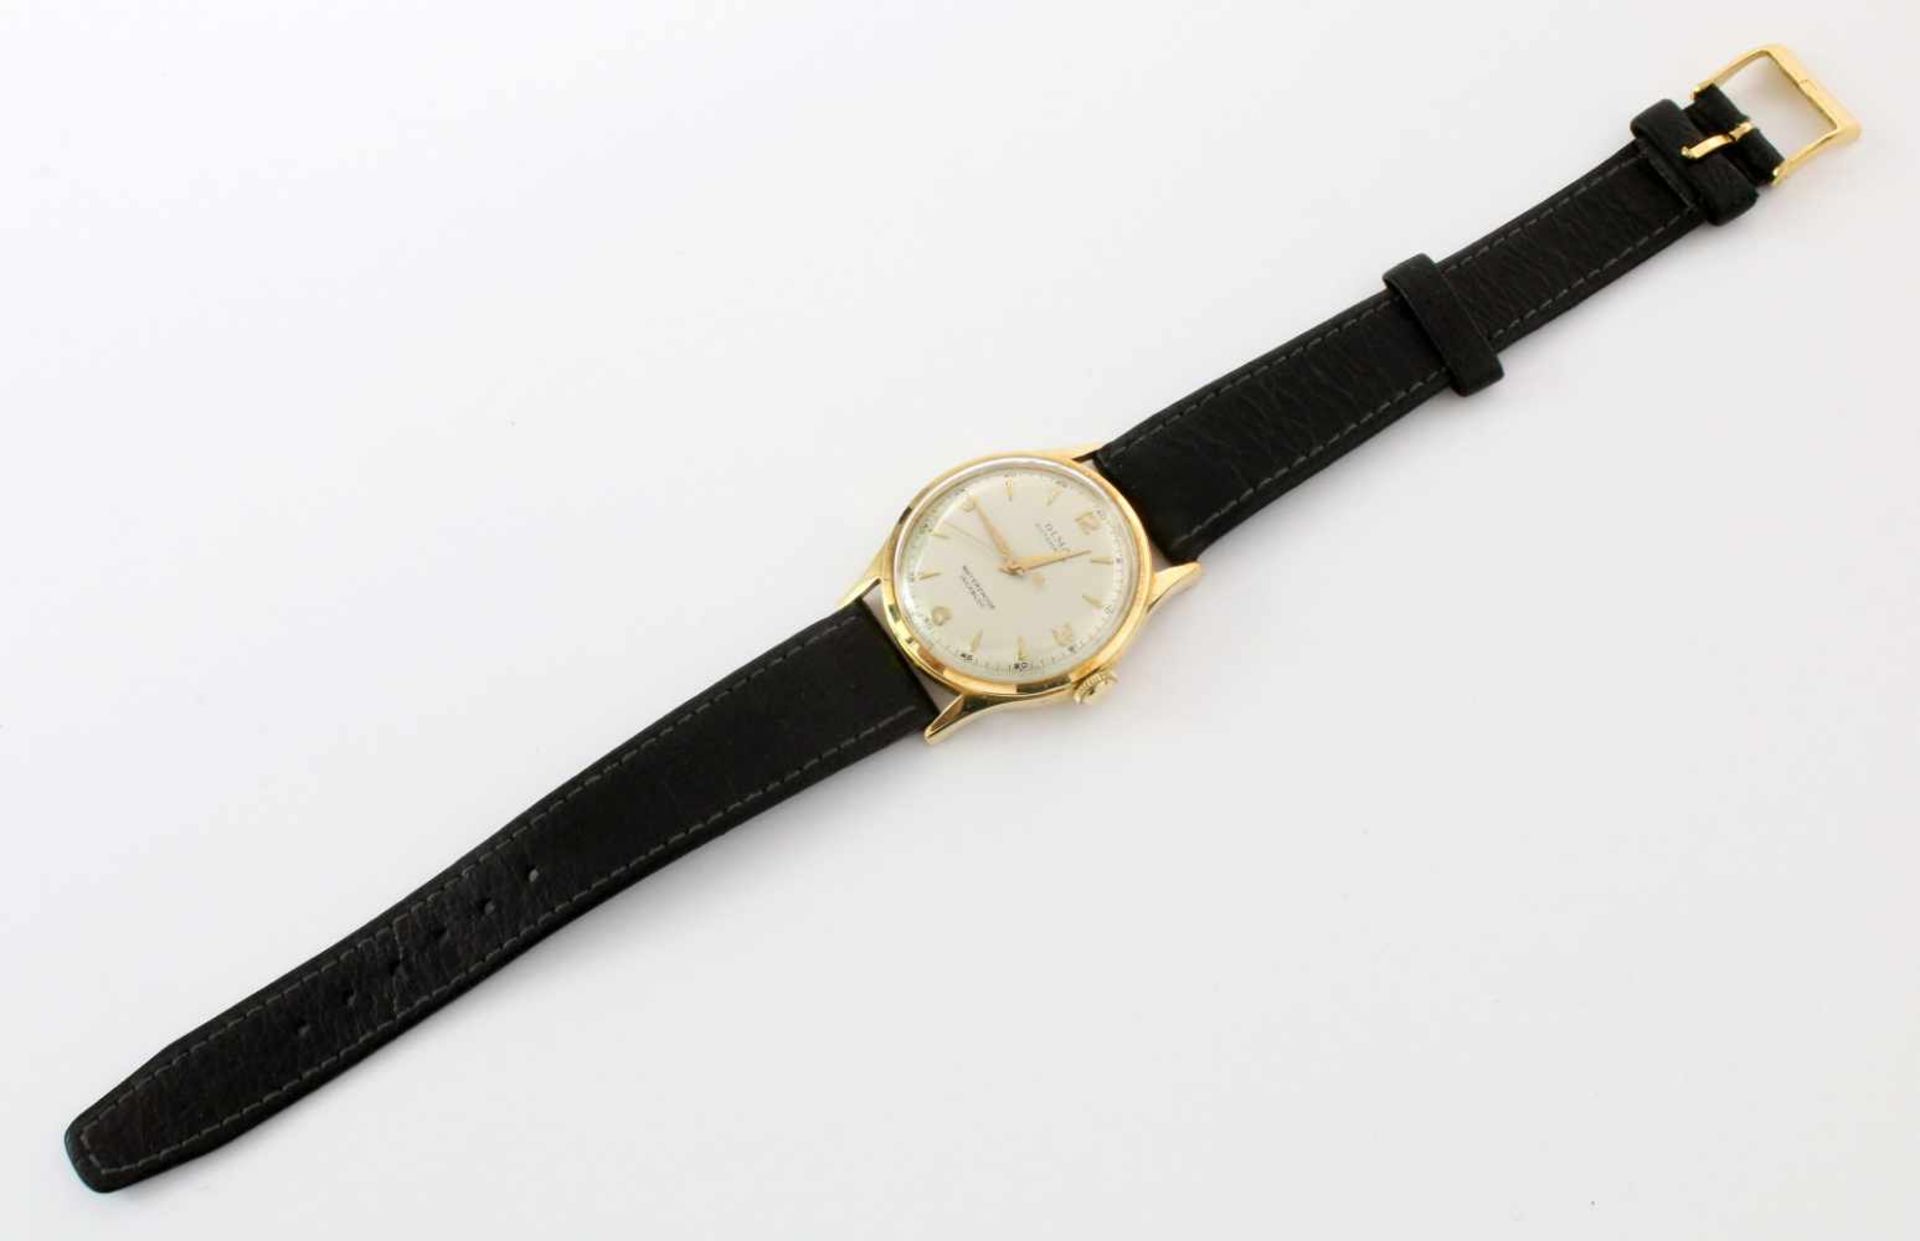 Goldene Armbanduhr Olma - 50/60 JahreAutomatikwerk, Gehäuse GG 585, Ø 32 mm, Plexiglas (ohne